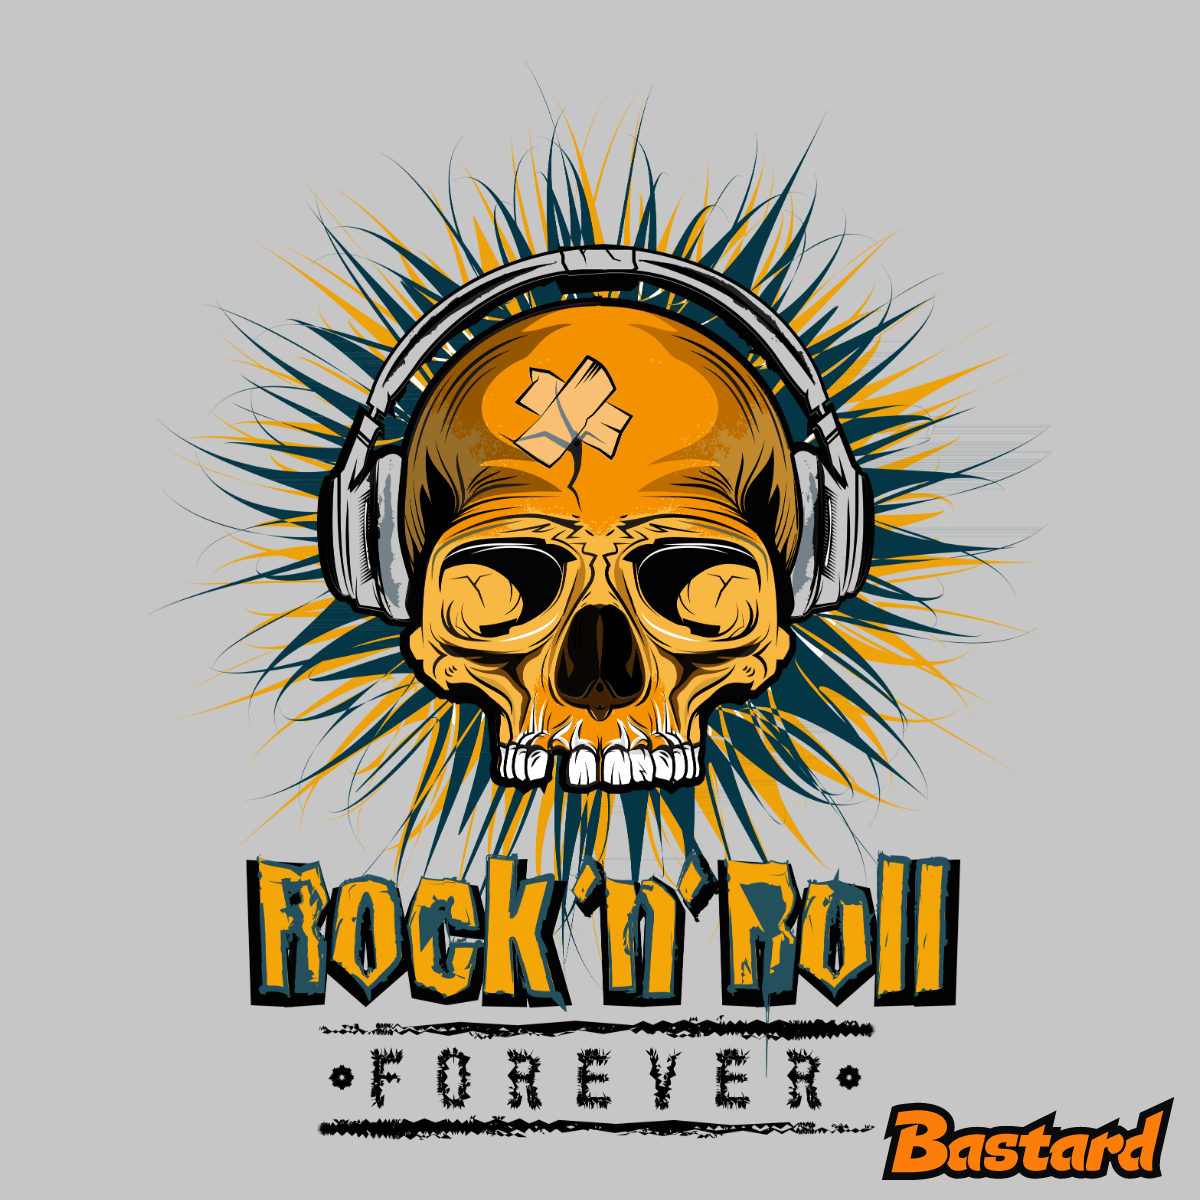 Rock'n'Roll forever